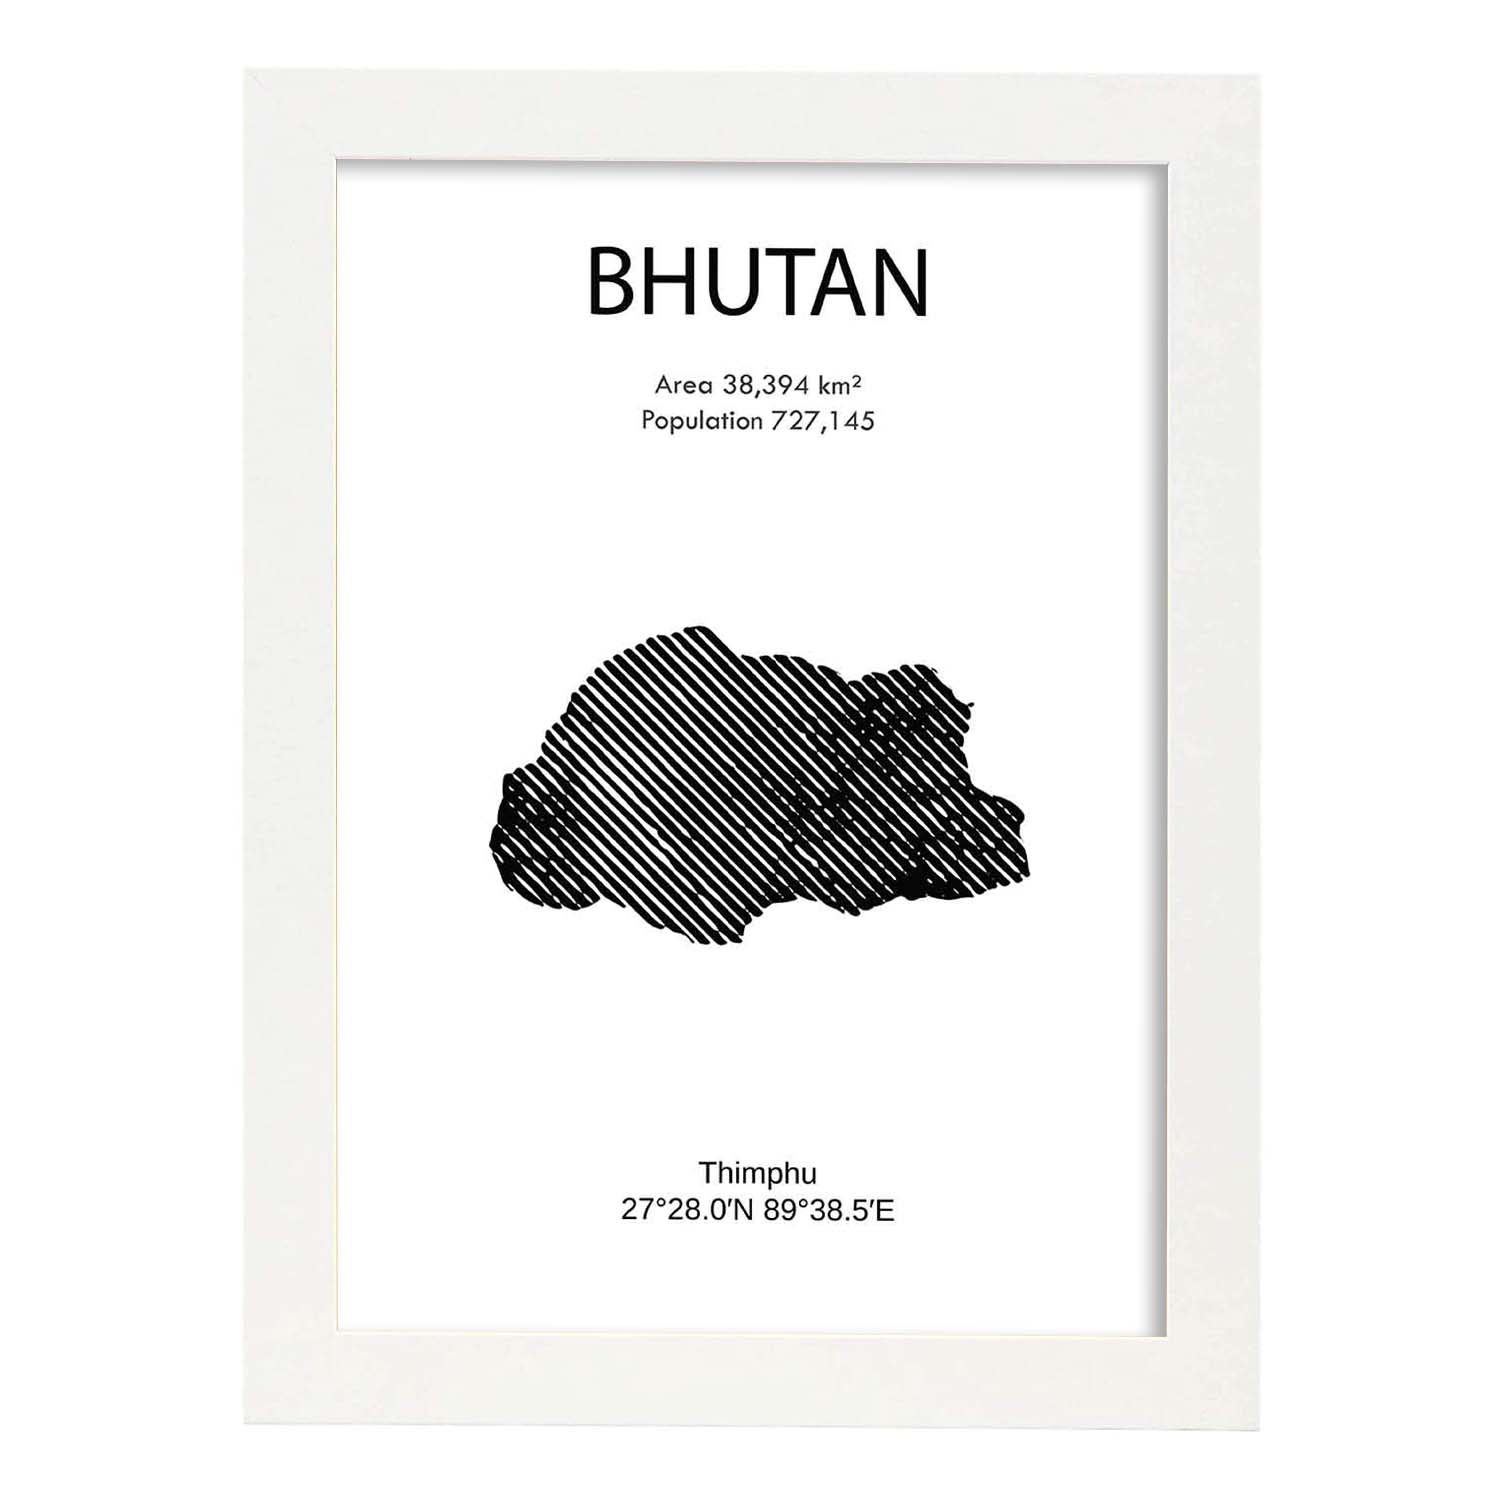 Poster de Bhutan. Láminas de paises y continentes del mundo.-Artwork-Nacnic-A4-Marco Blanco-Nacnic Estudio SL